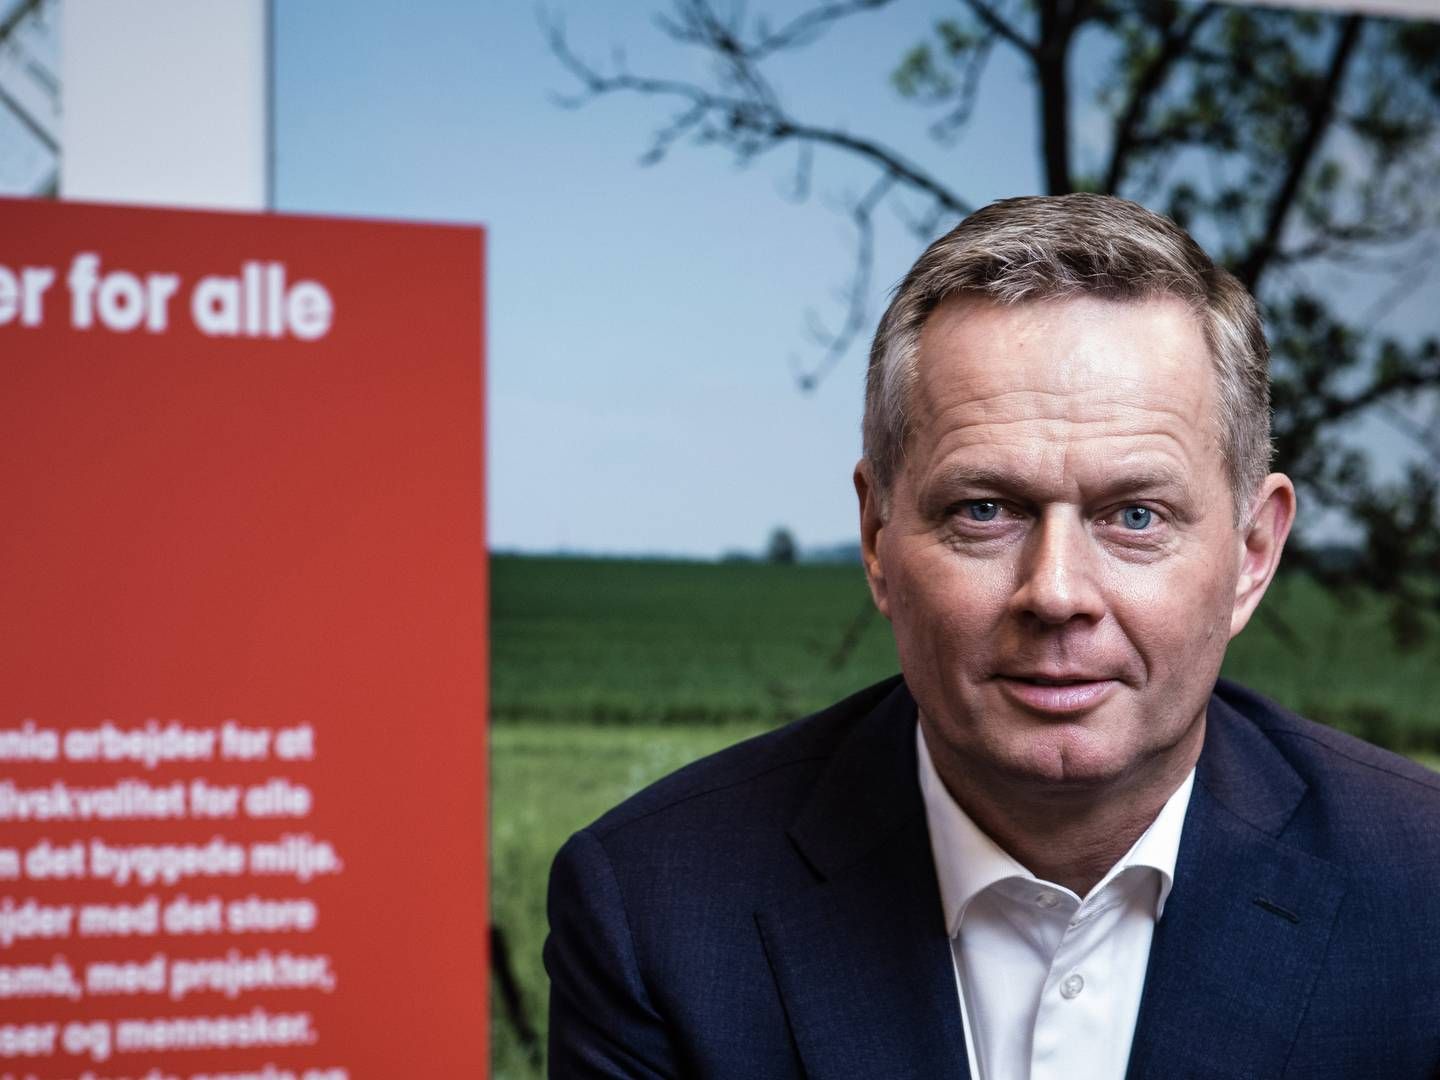 Peter Johansen stopper som investeringsdirektør i Realdania i løbet af 2020. | Foto: PR / Realdania.